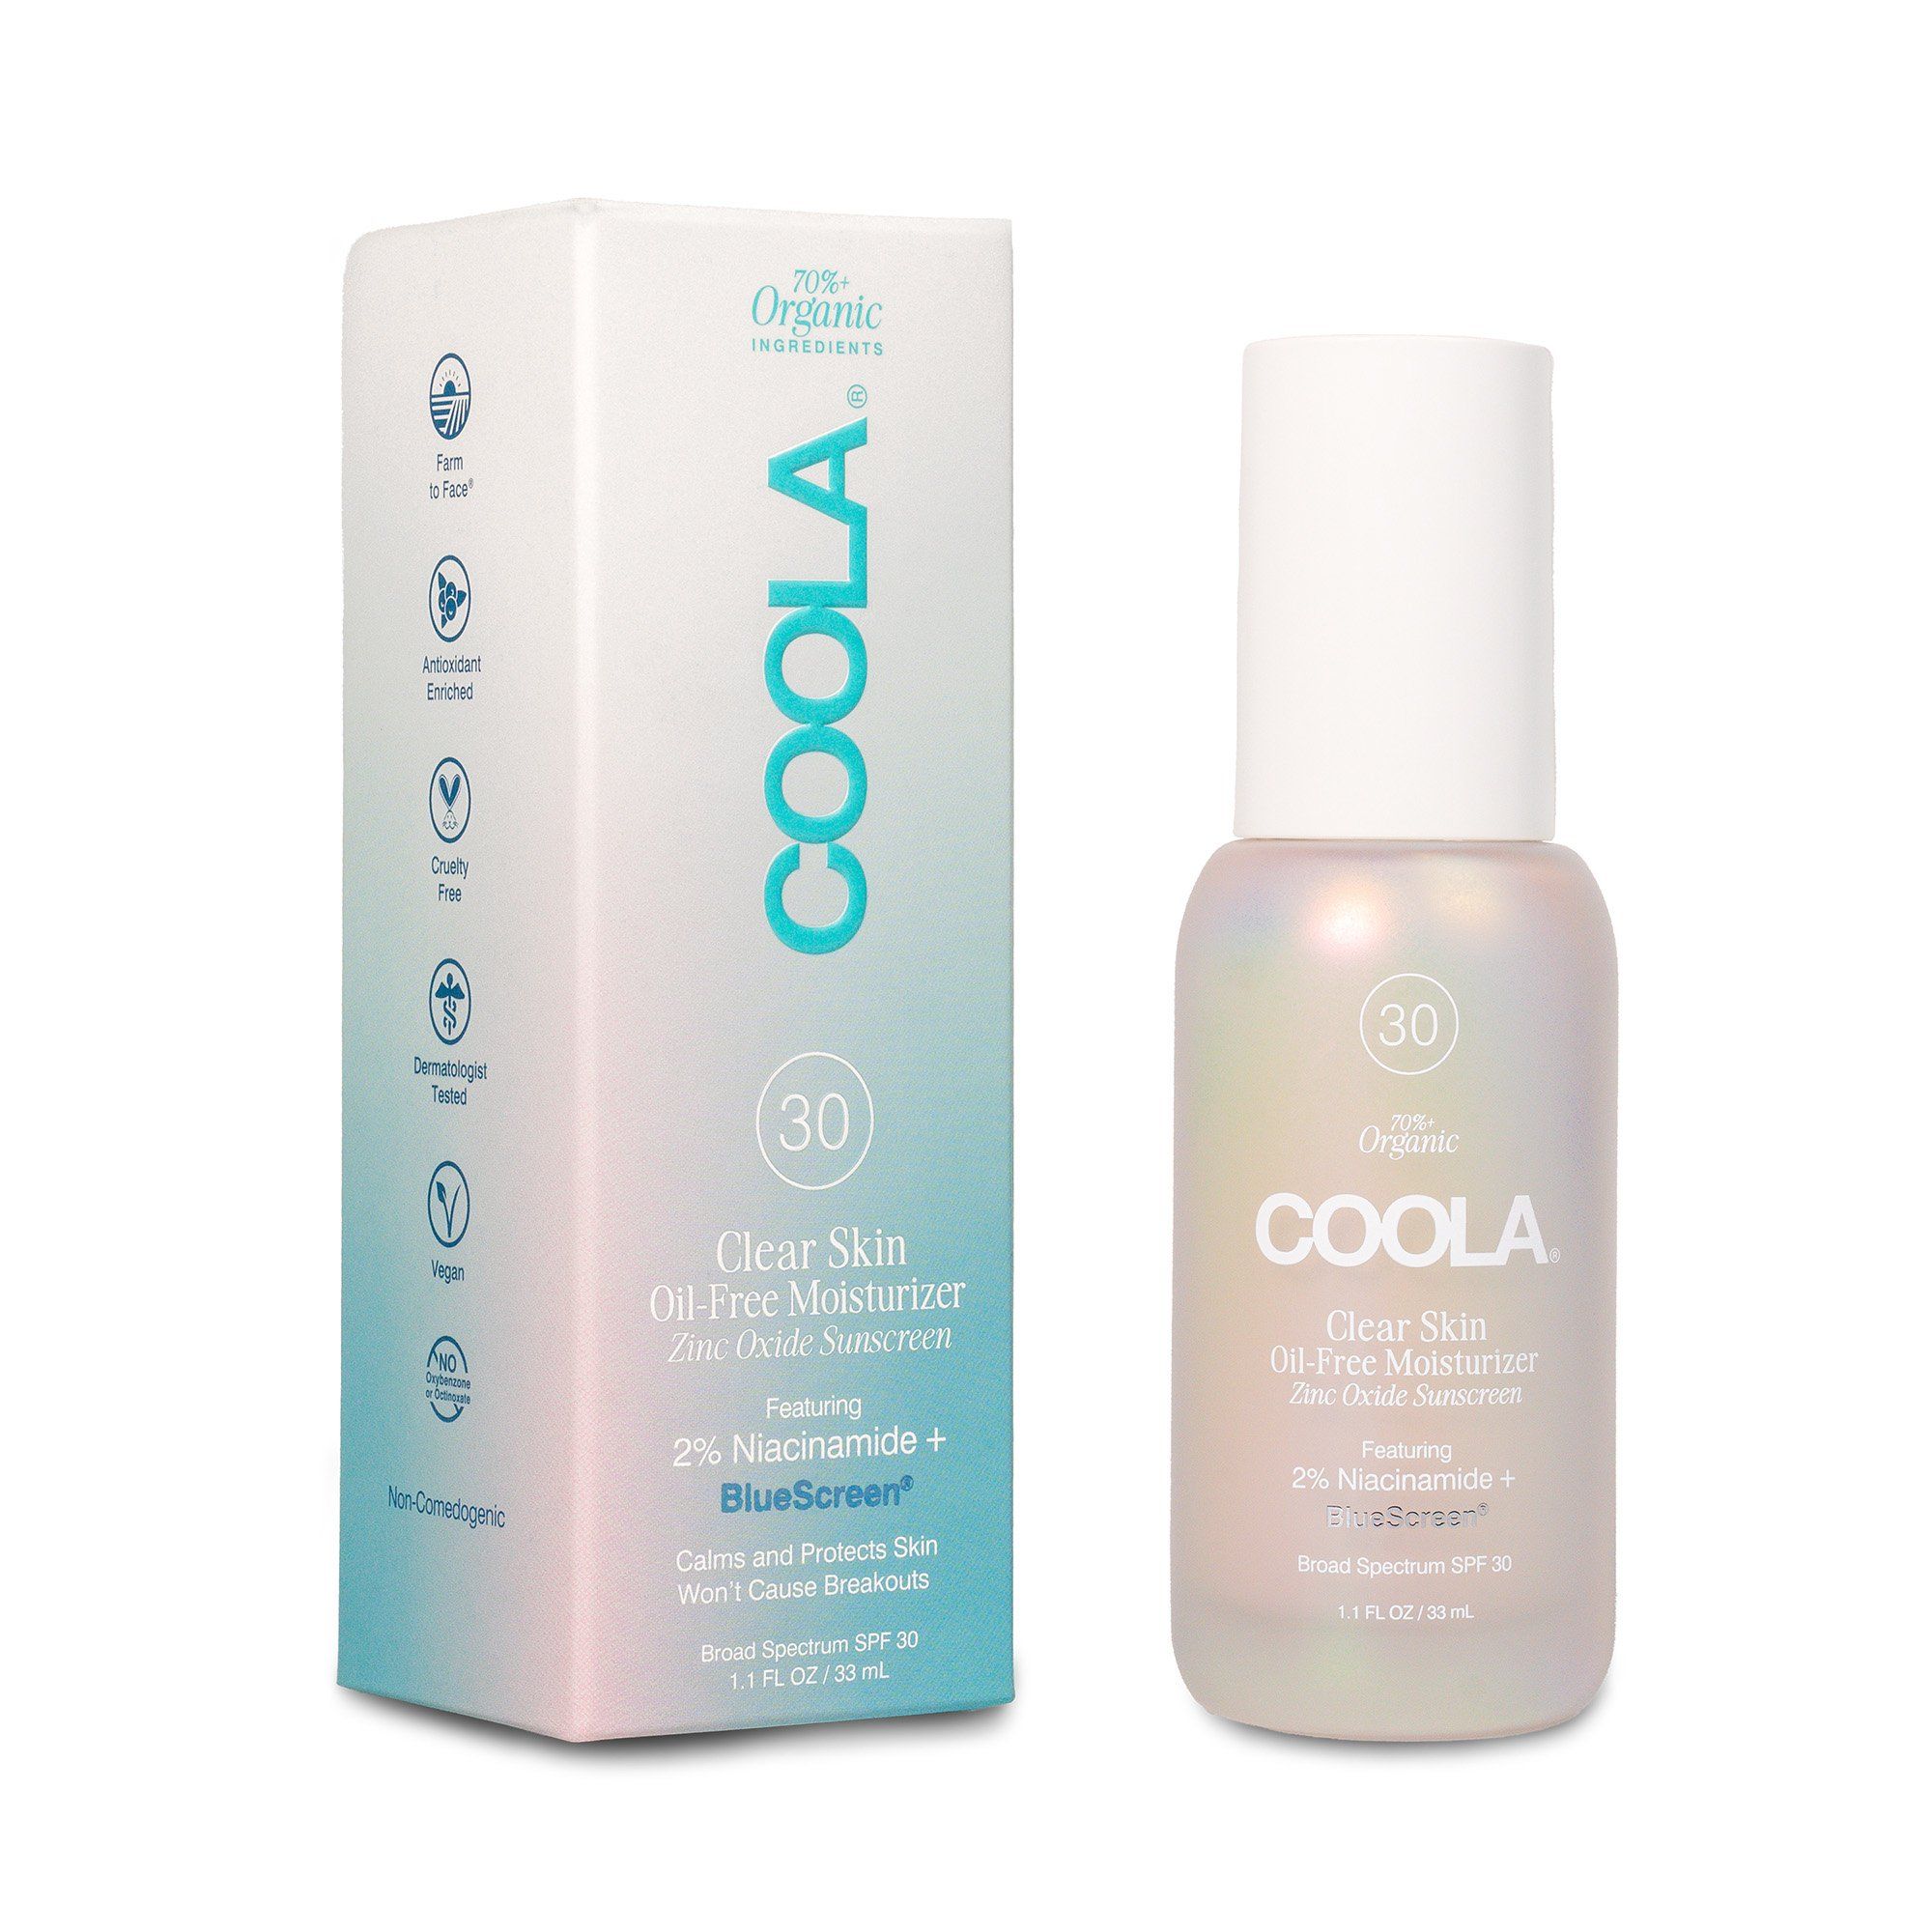 COOLA Clear Skin Oil-Free Moisturizer,  SPF 30 - 1.1 fl oz